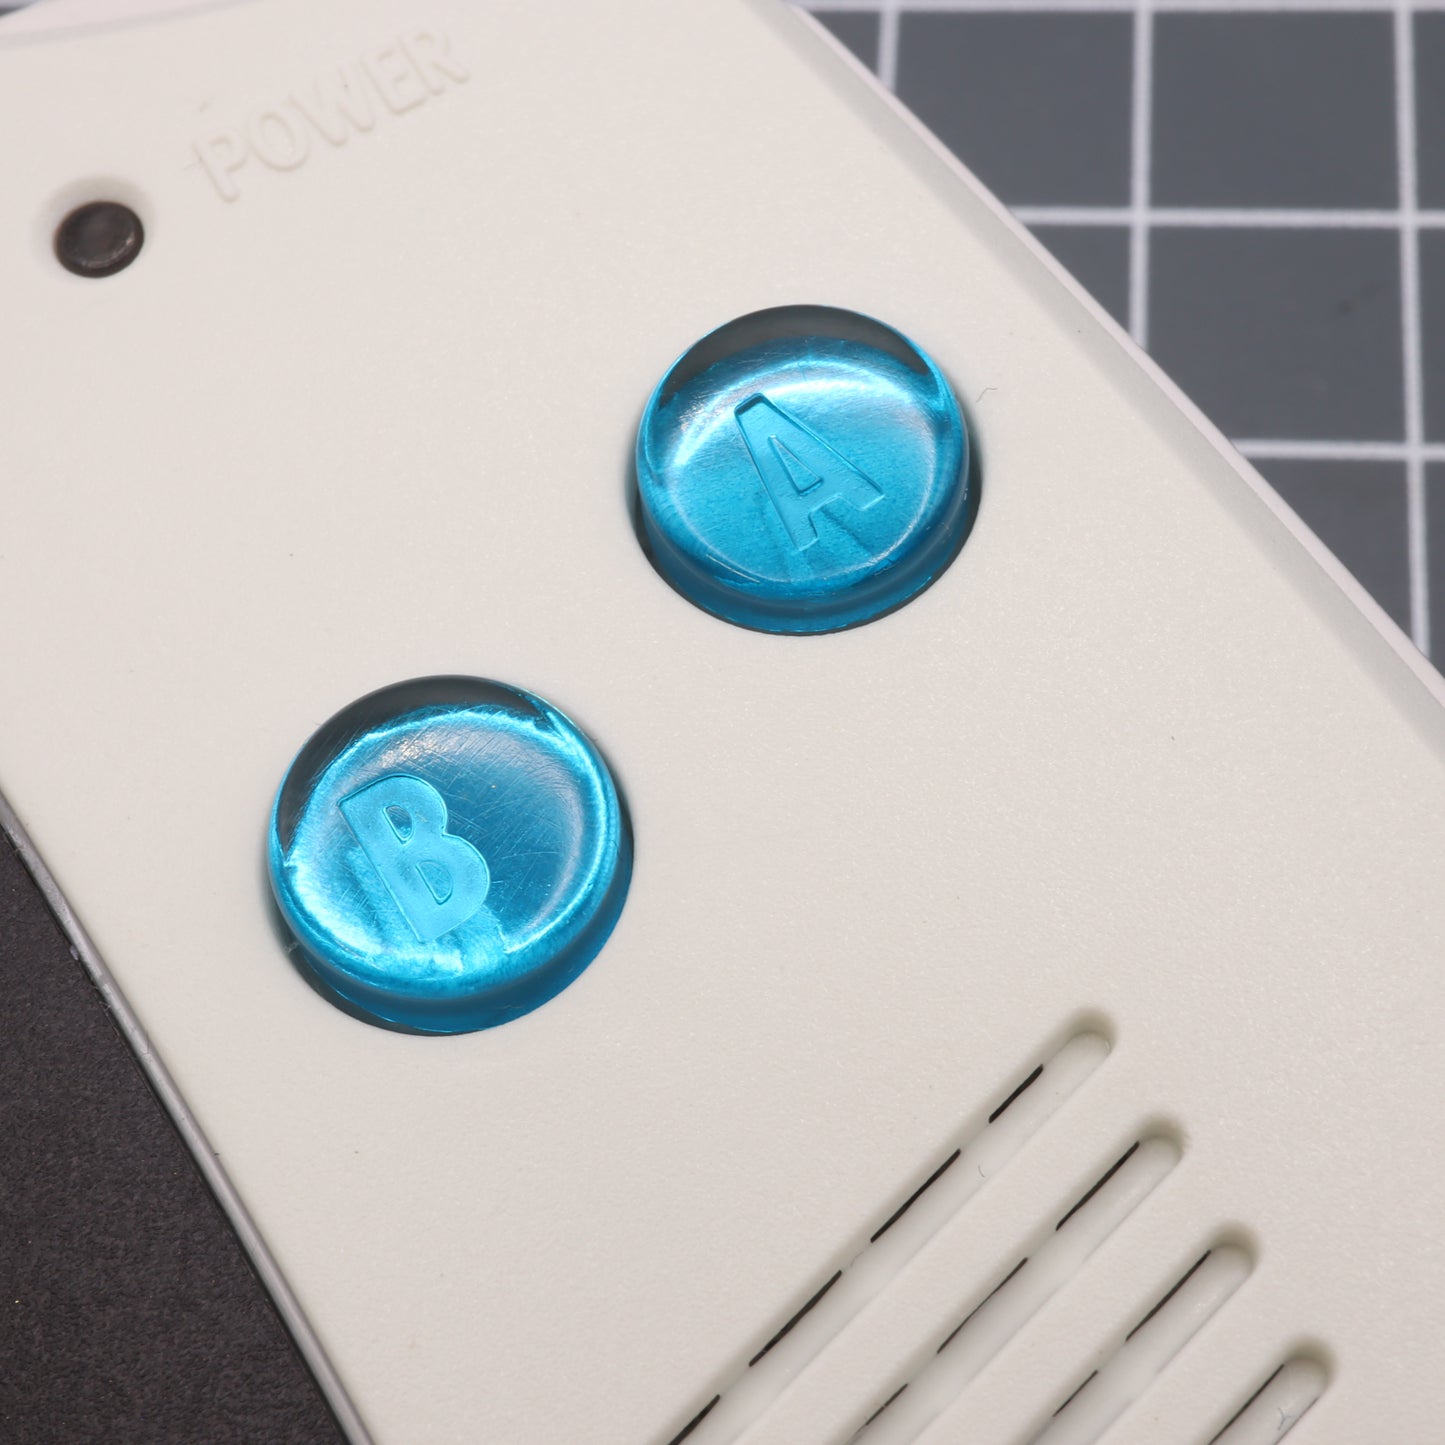 Game Boy Advance - Custom Buttons - Chrome Blue